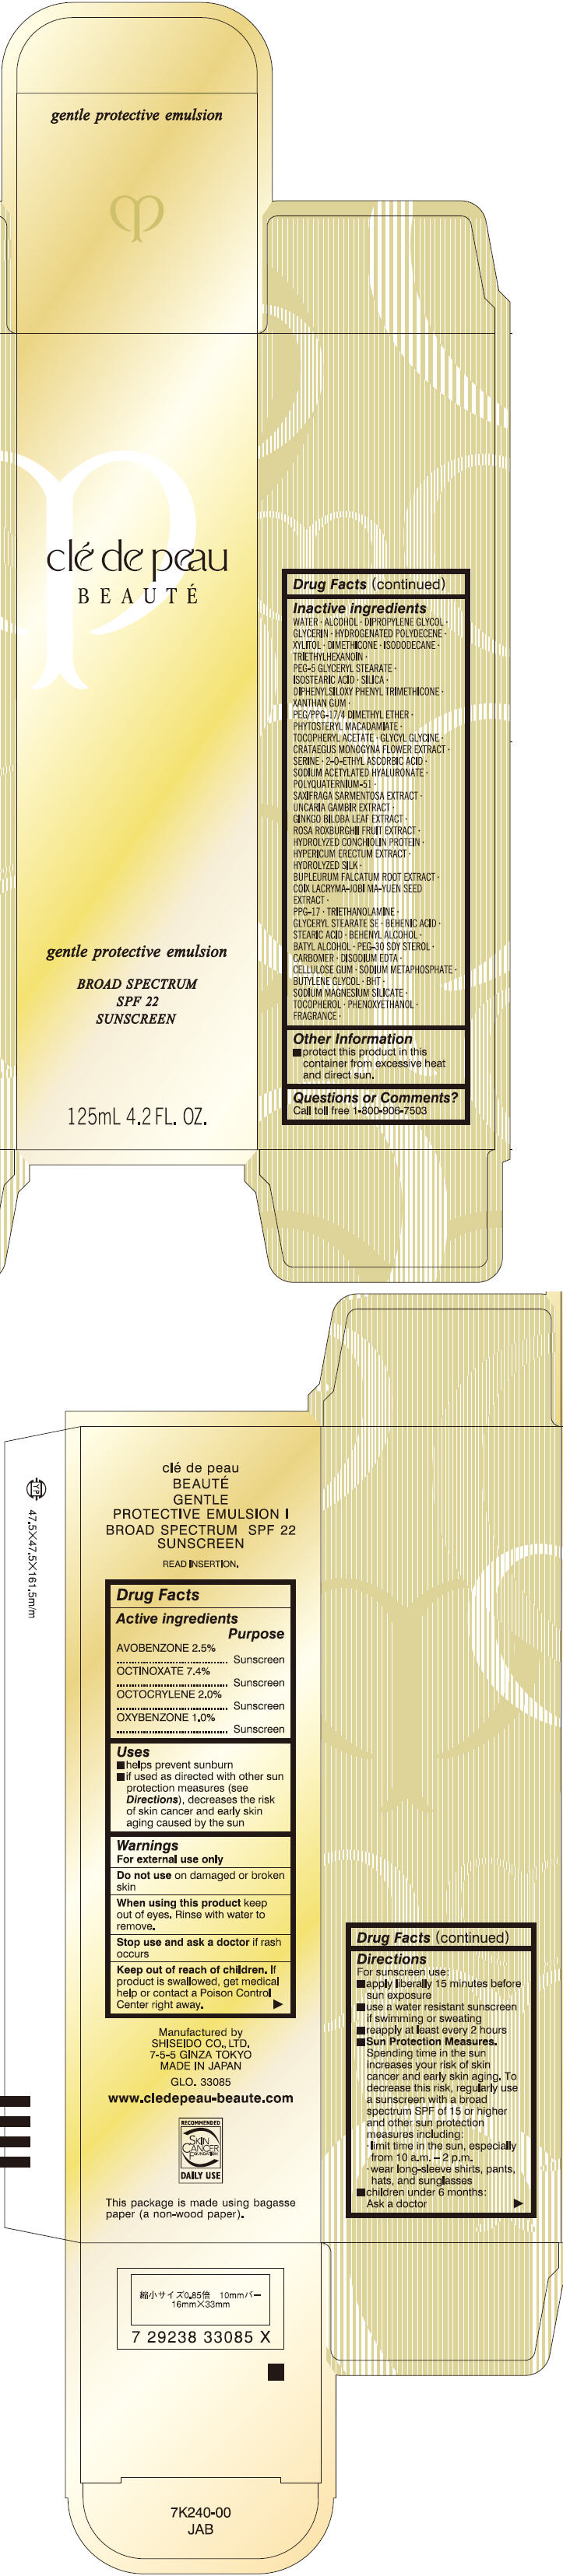 Principal Display Panel - 125mL Bottle Carton